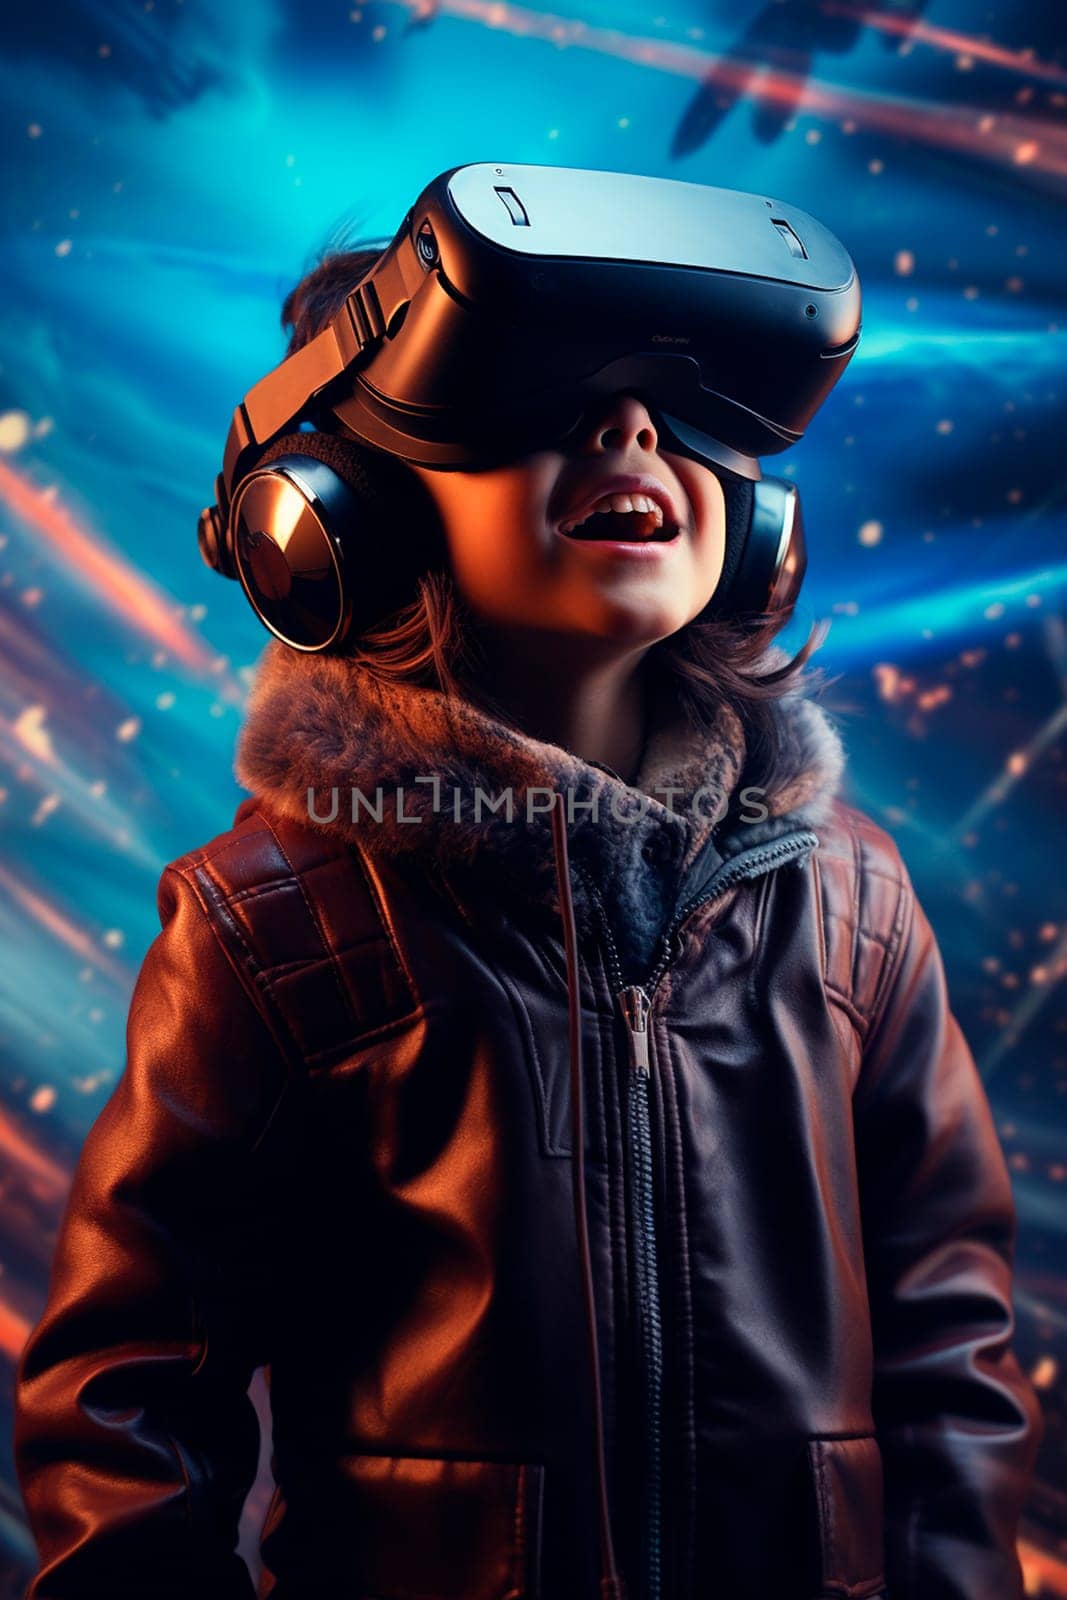 The child looks into virtual reality glasses. Generative AI, by yanadjana